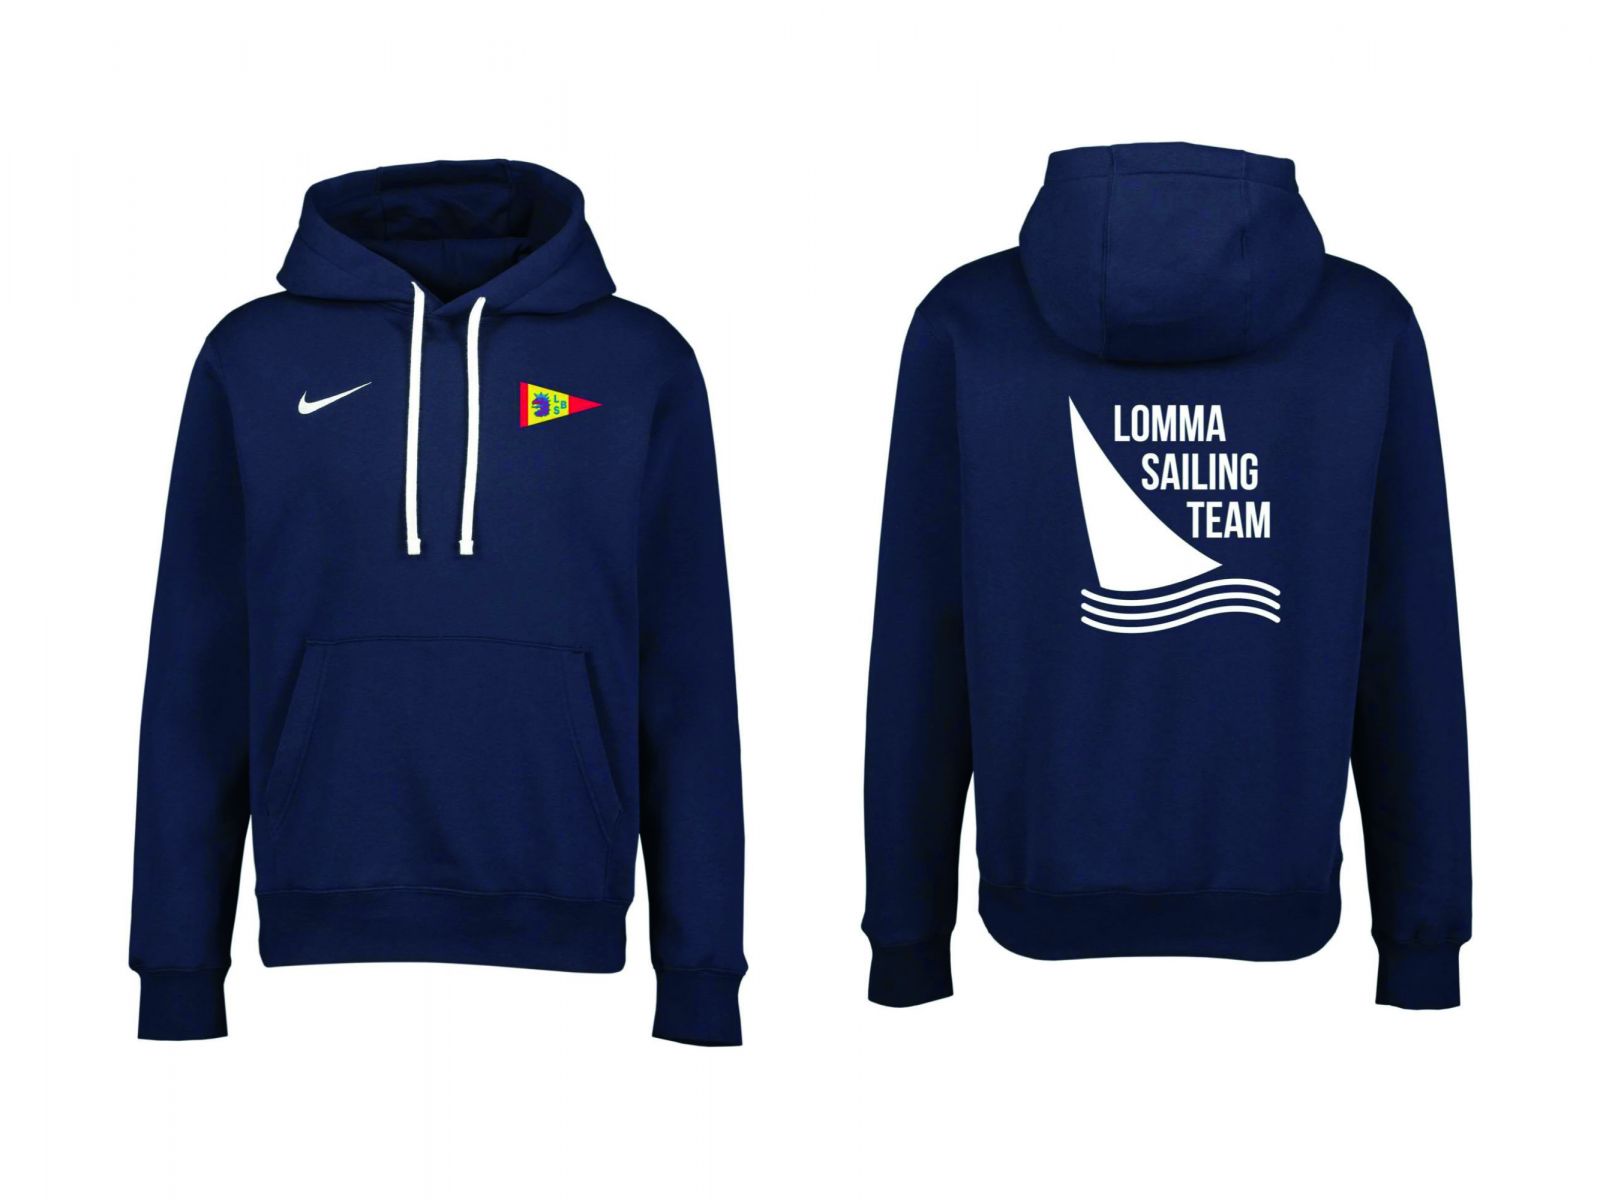 image: Beställ Lomma sailingteam kläder!